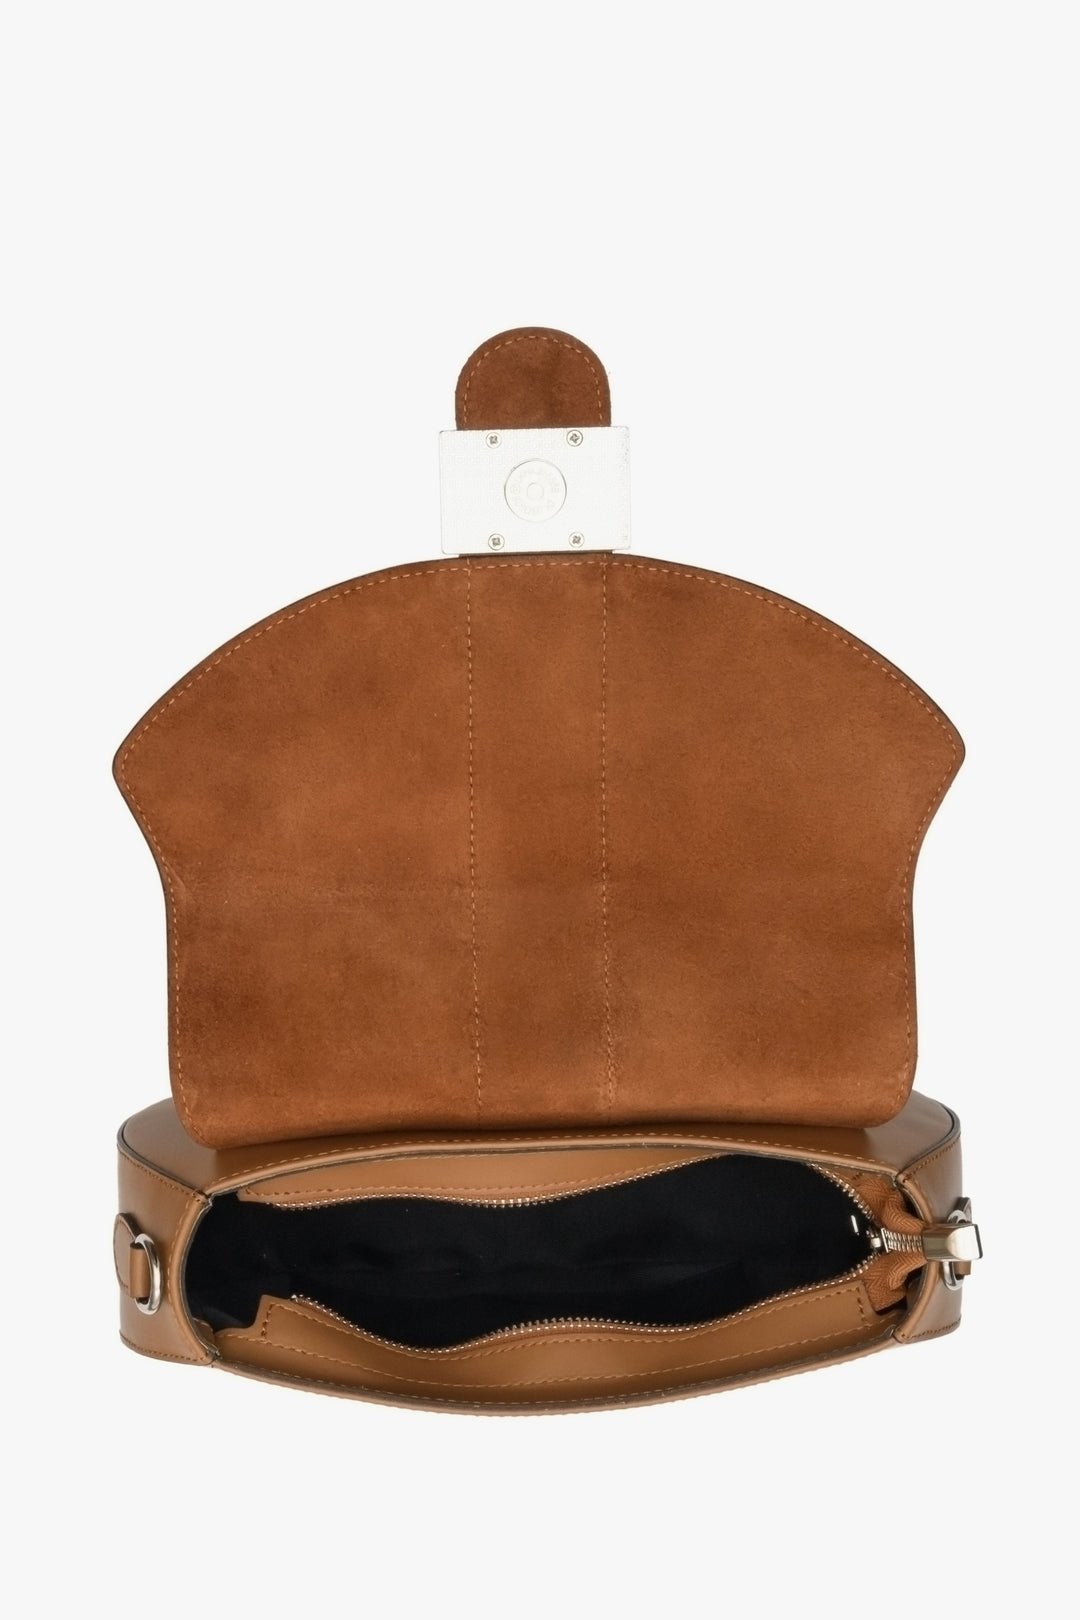 Women's horseshoe-shaped handbag in brown by Estro - interior of the model.